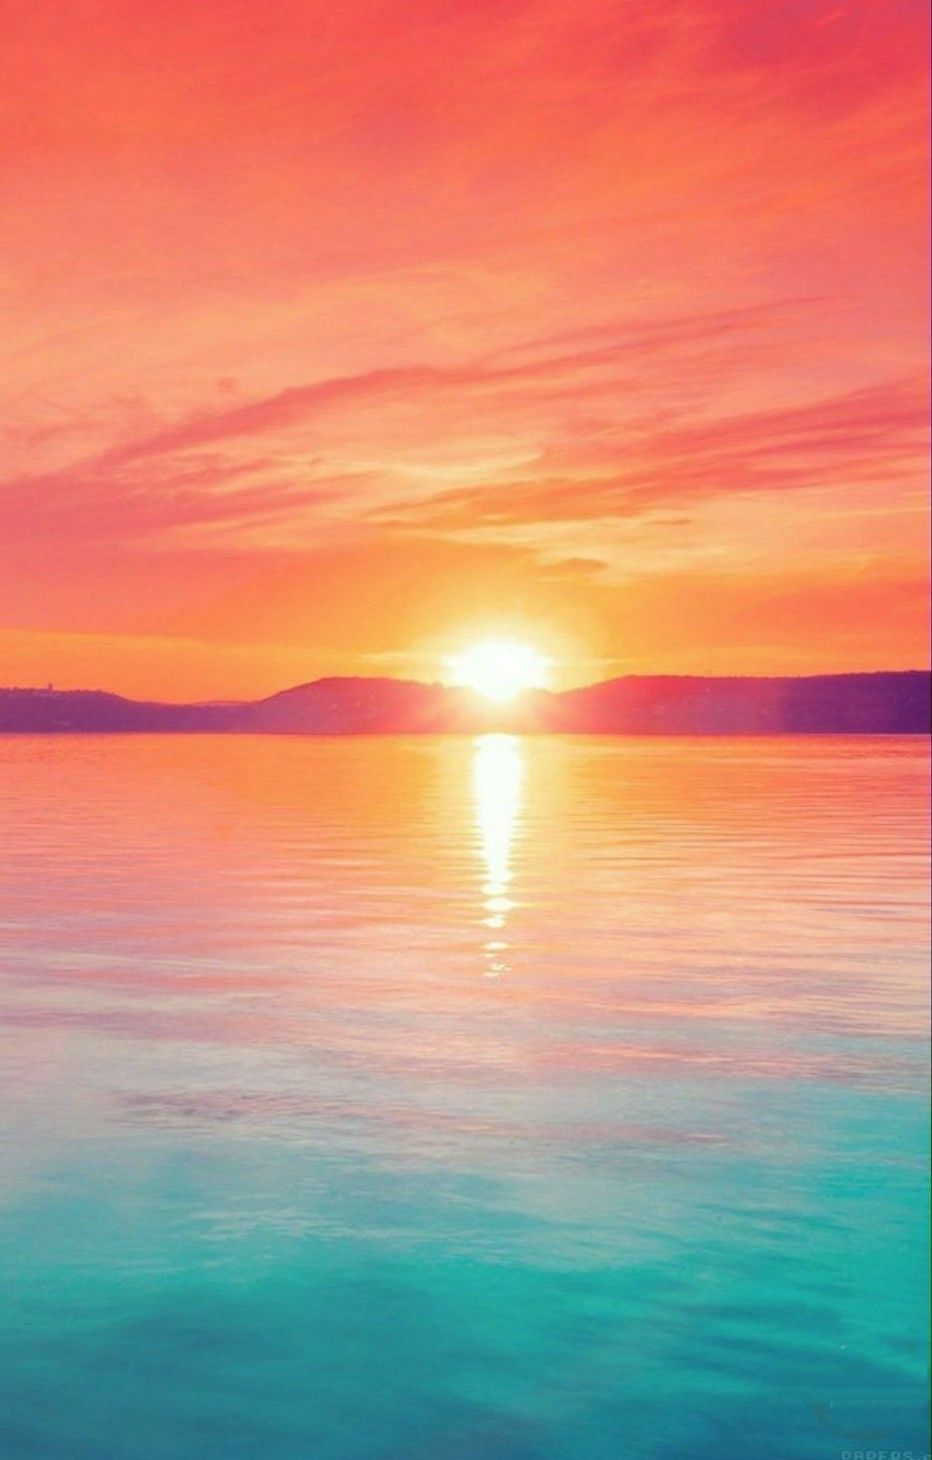 It's so beautiful!!!. Sunset iphone wallpaper, Beach sunset wallpaper, Sunset wallpaper